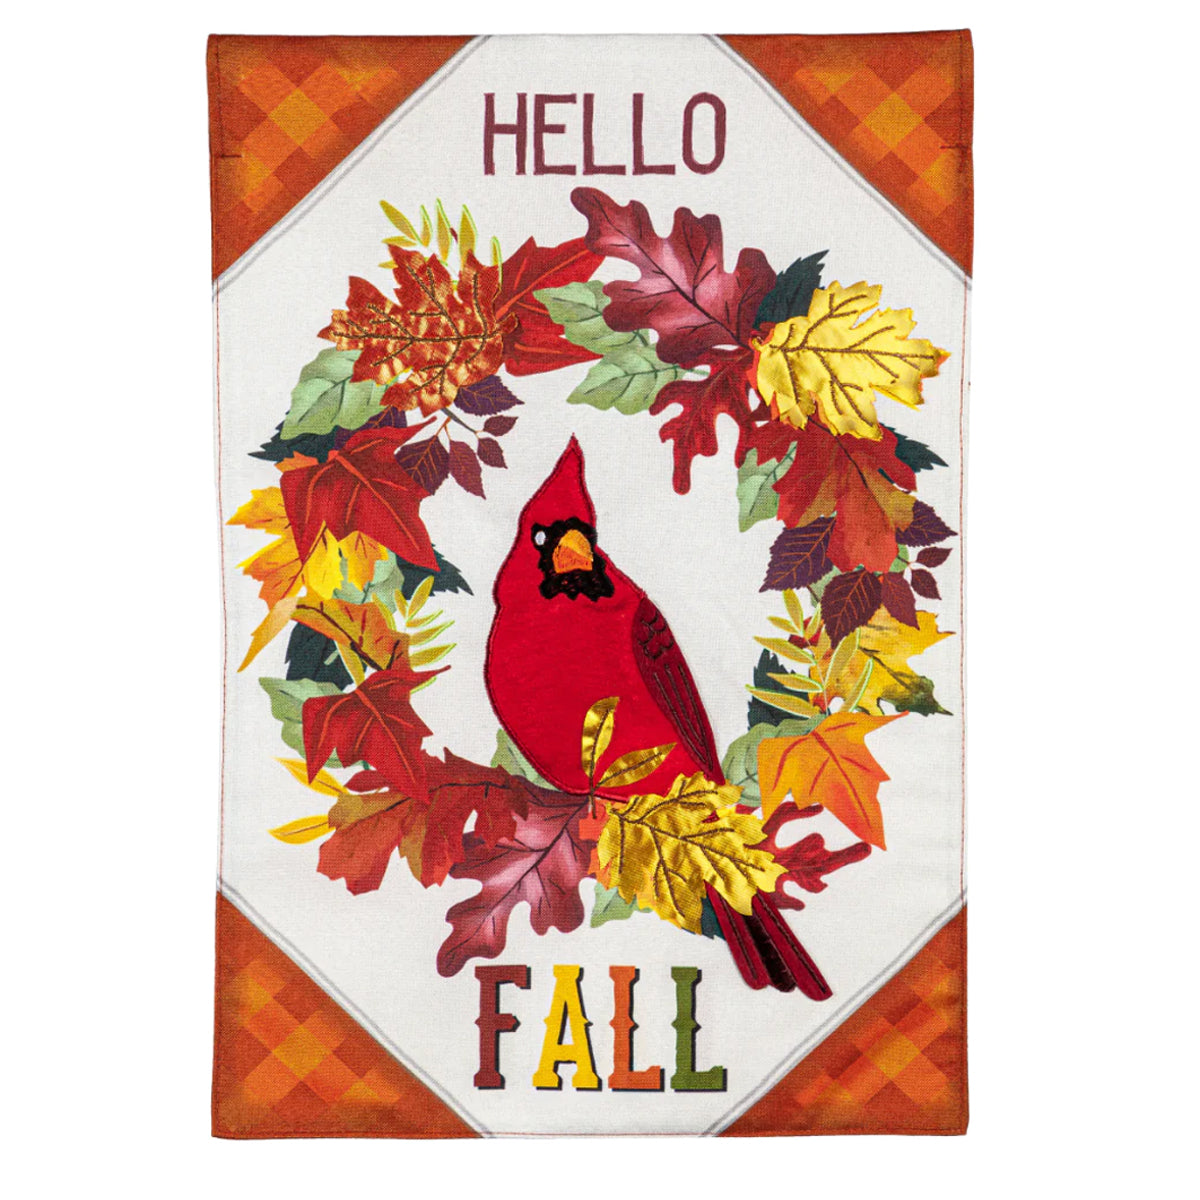 "Hello Fall" Cardinal House Linen Flag